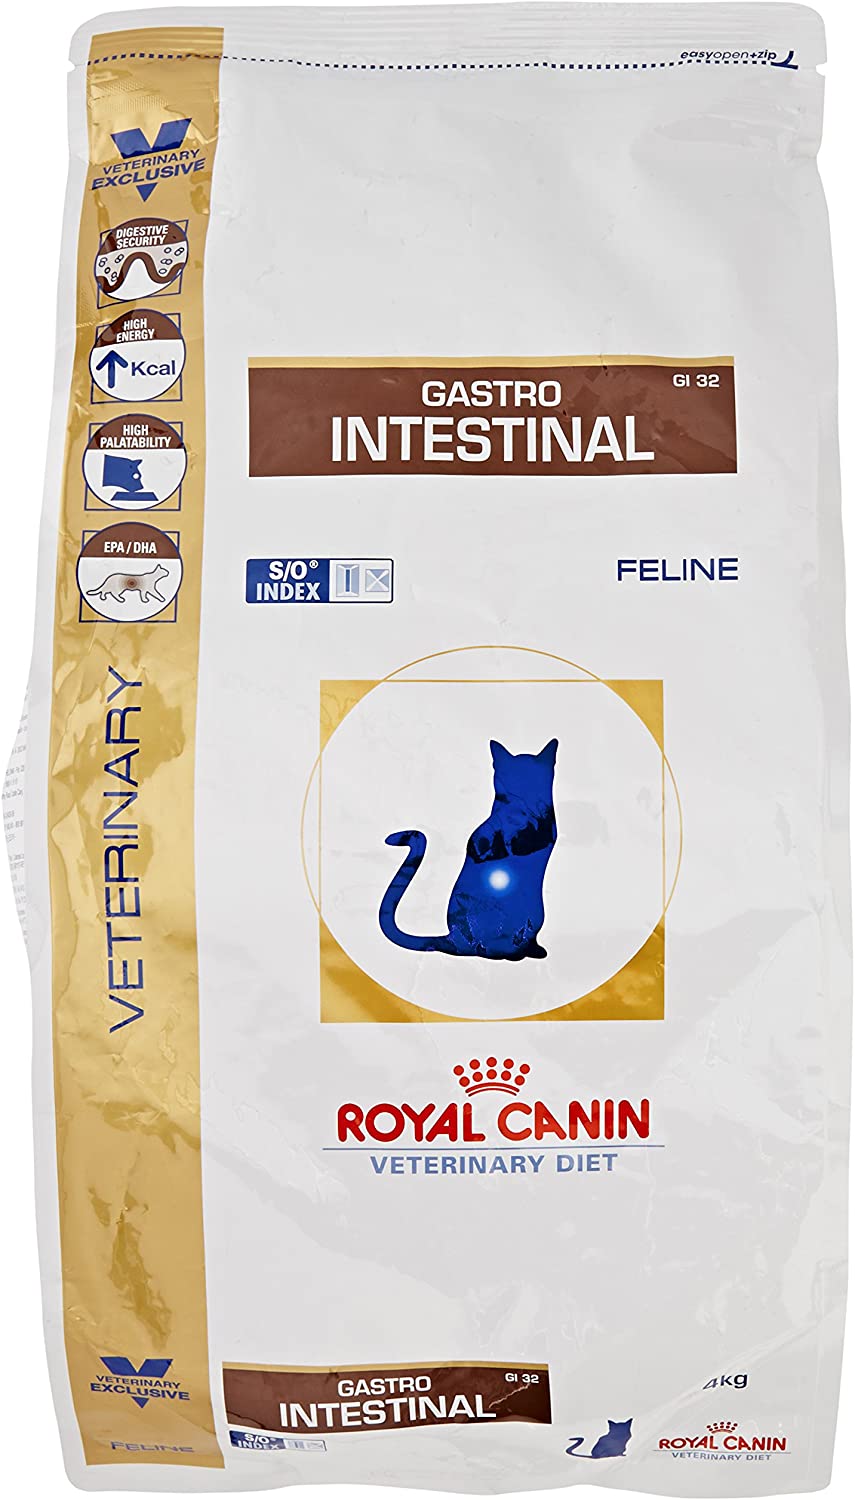  ROYAL CANIN Alimento para Gatos Gastro Intestinal GI32-4 kg 